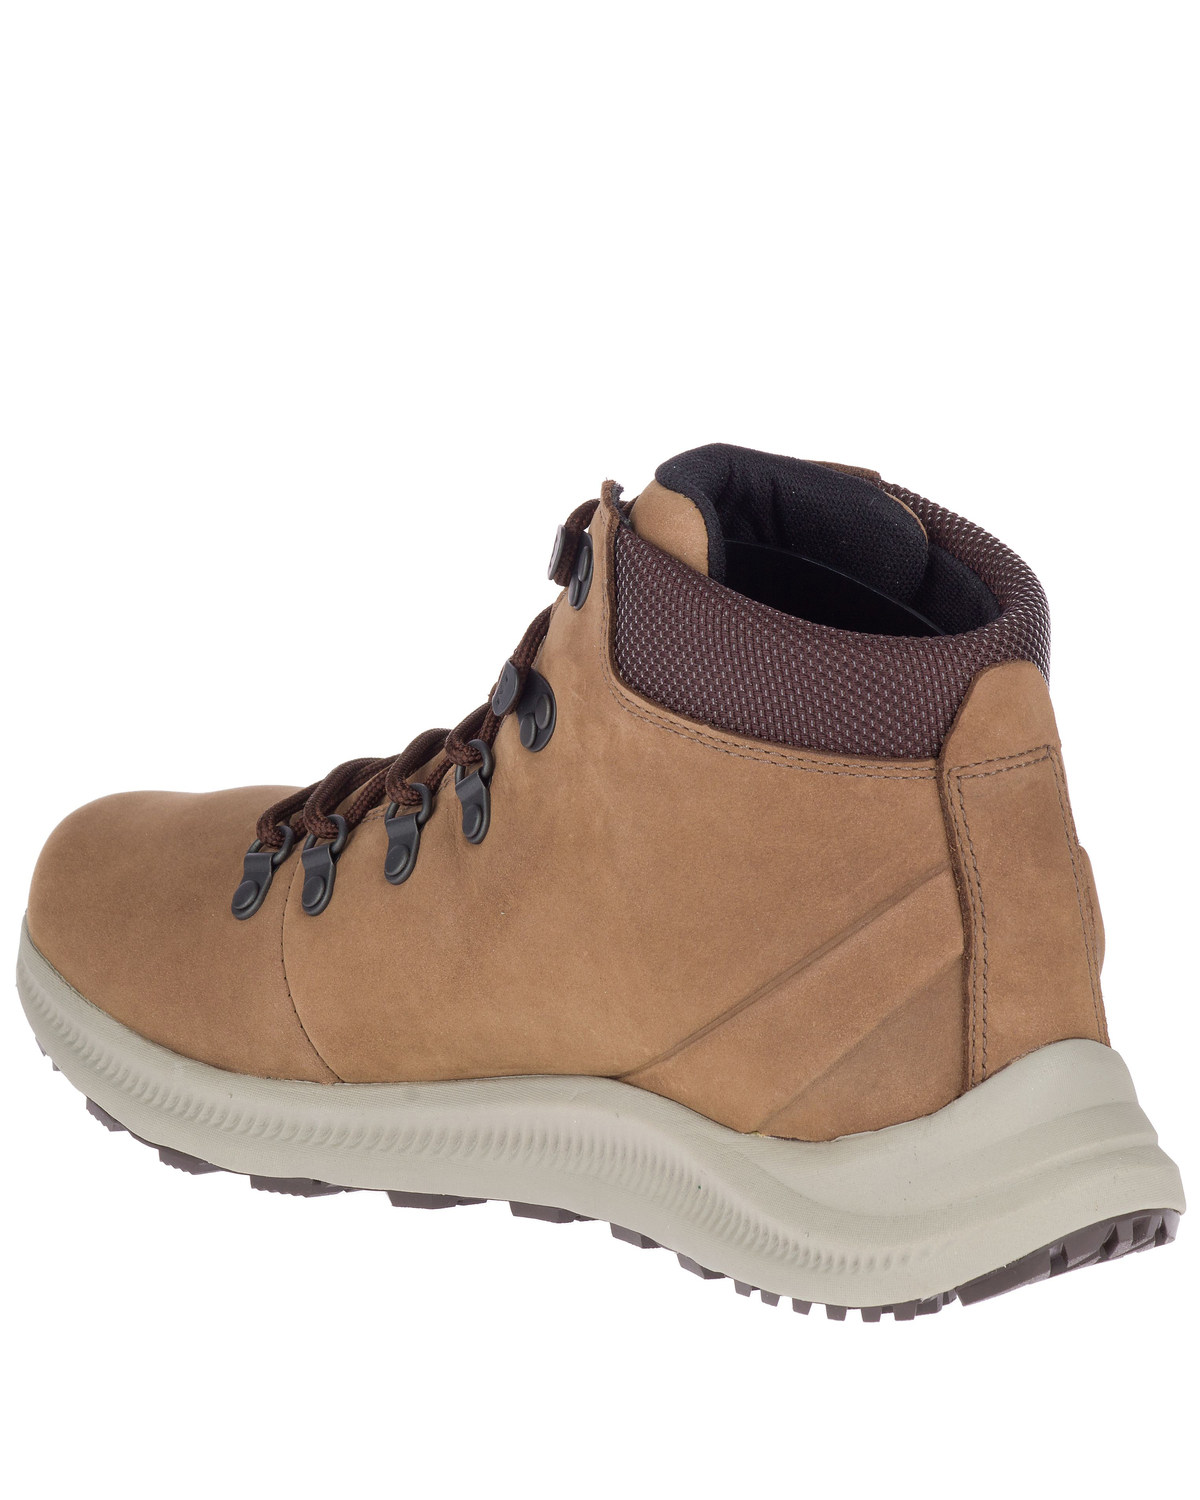 Merrell Men's Ontario Waterproof Hiking Boots - Soft Toe | Boot Barn